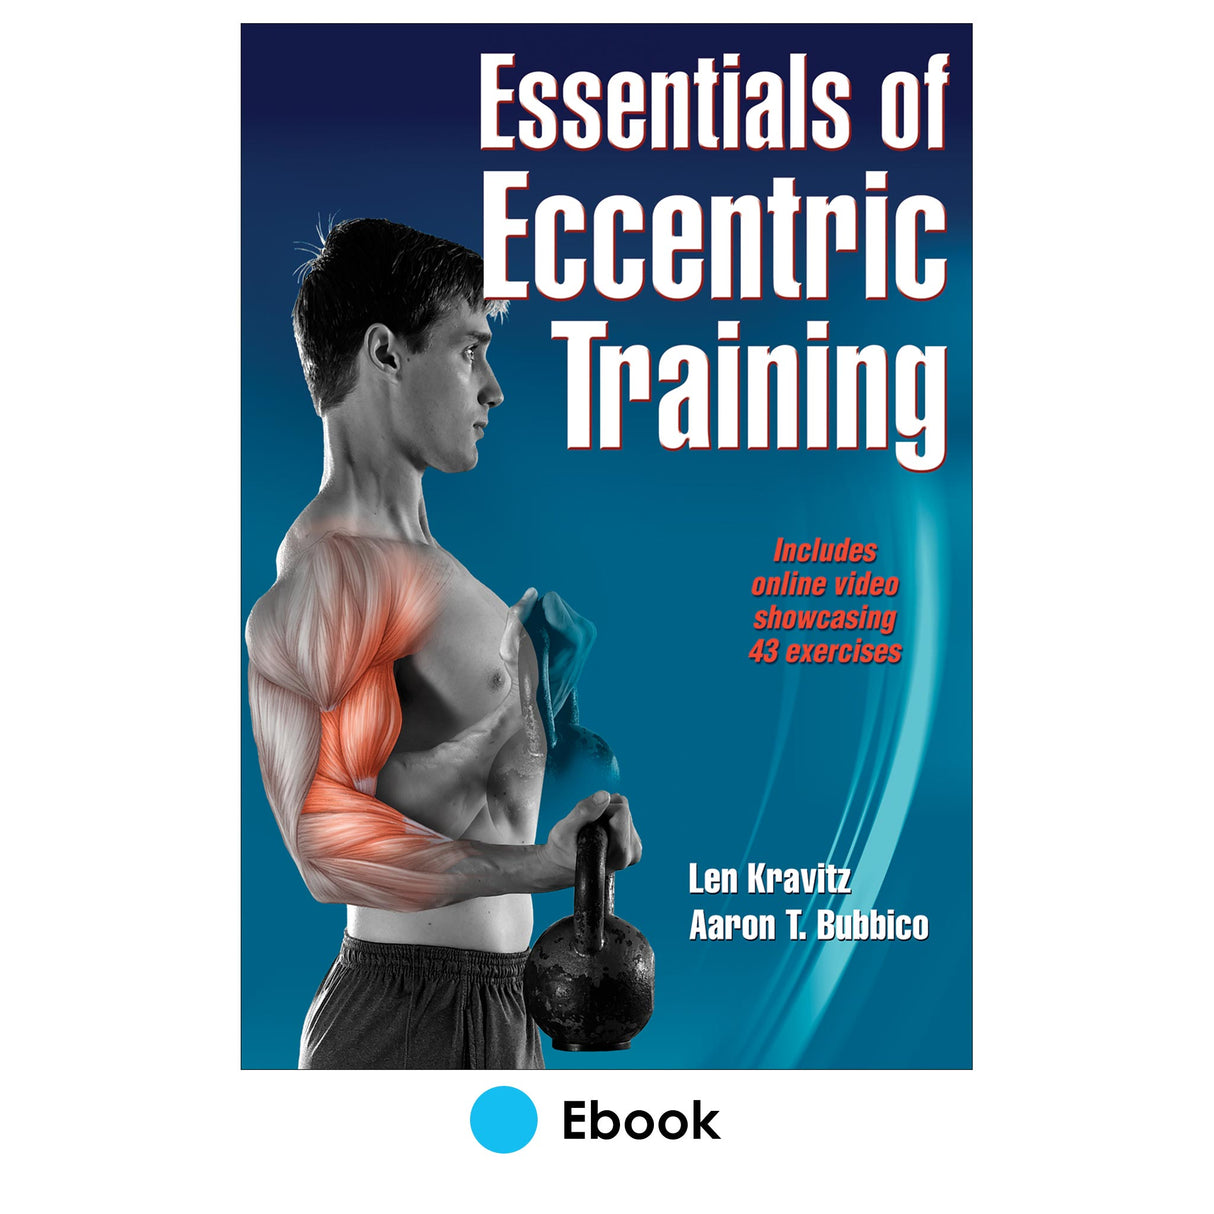 Essentials of Eccentric Training PDF With Online Video